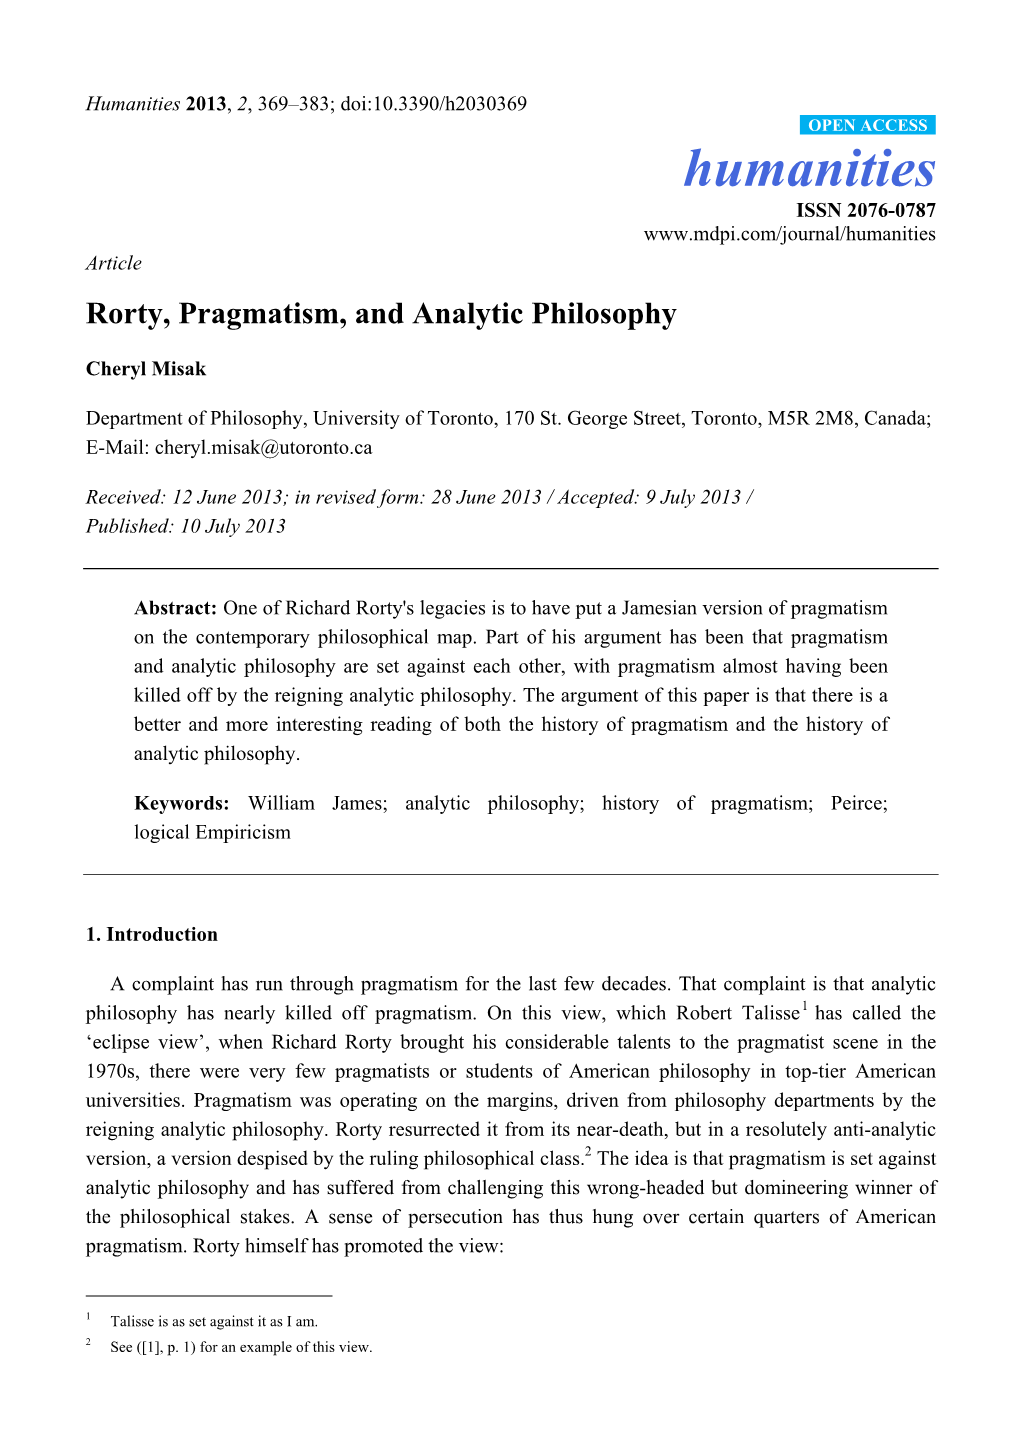 Rorty, Pragmatism, and Analytic Philosophy